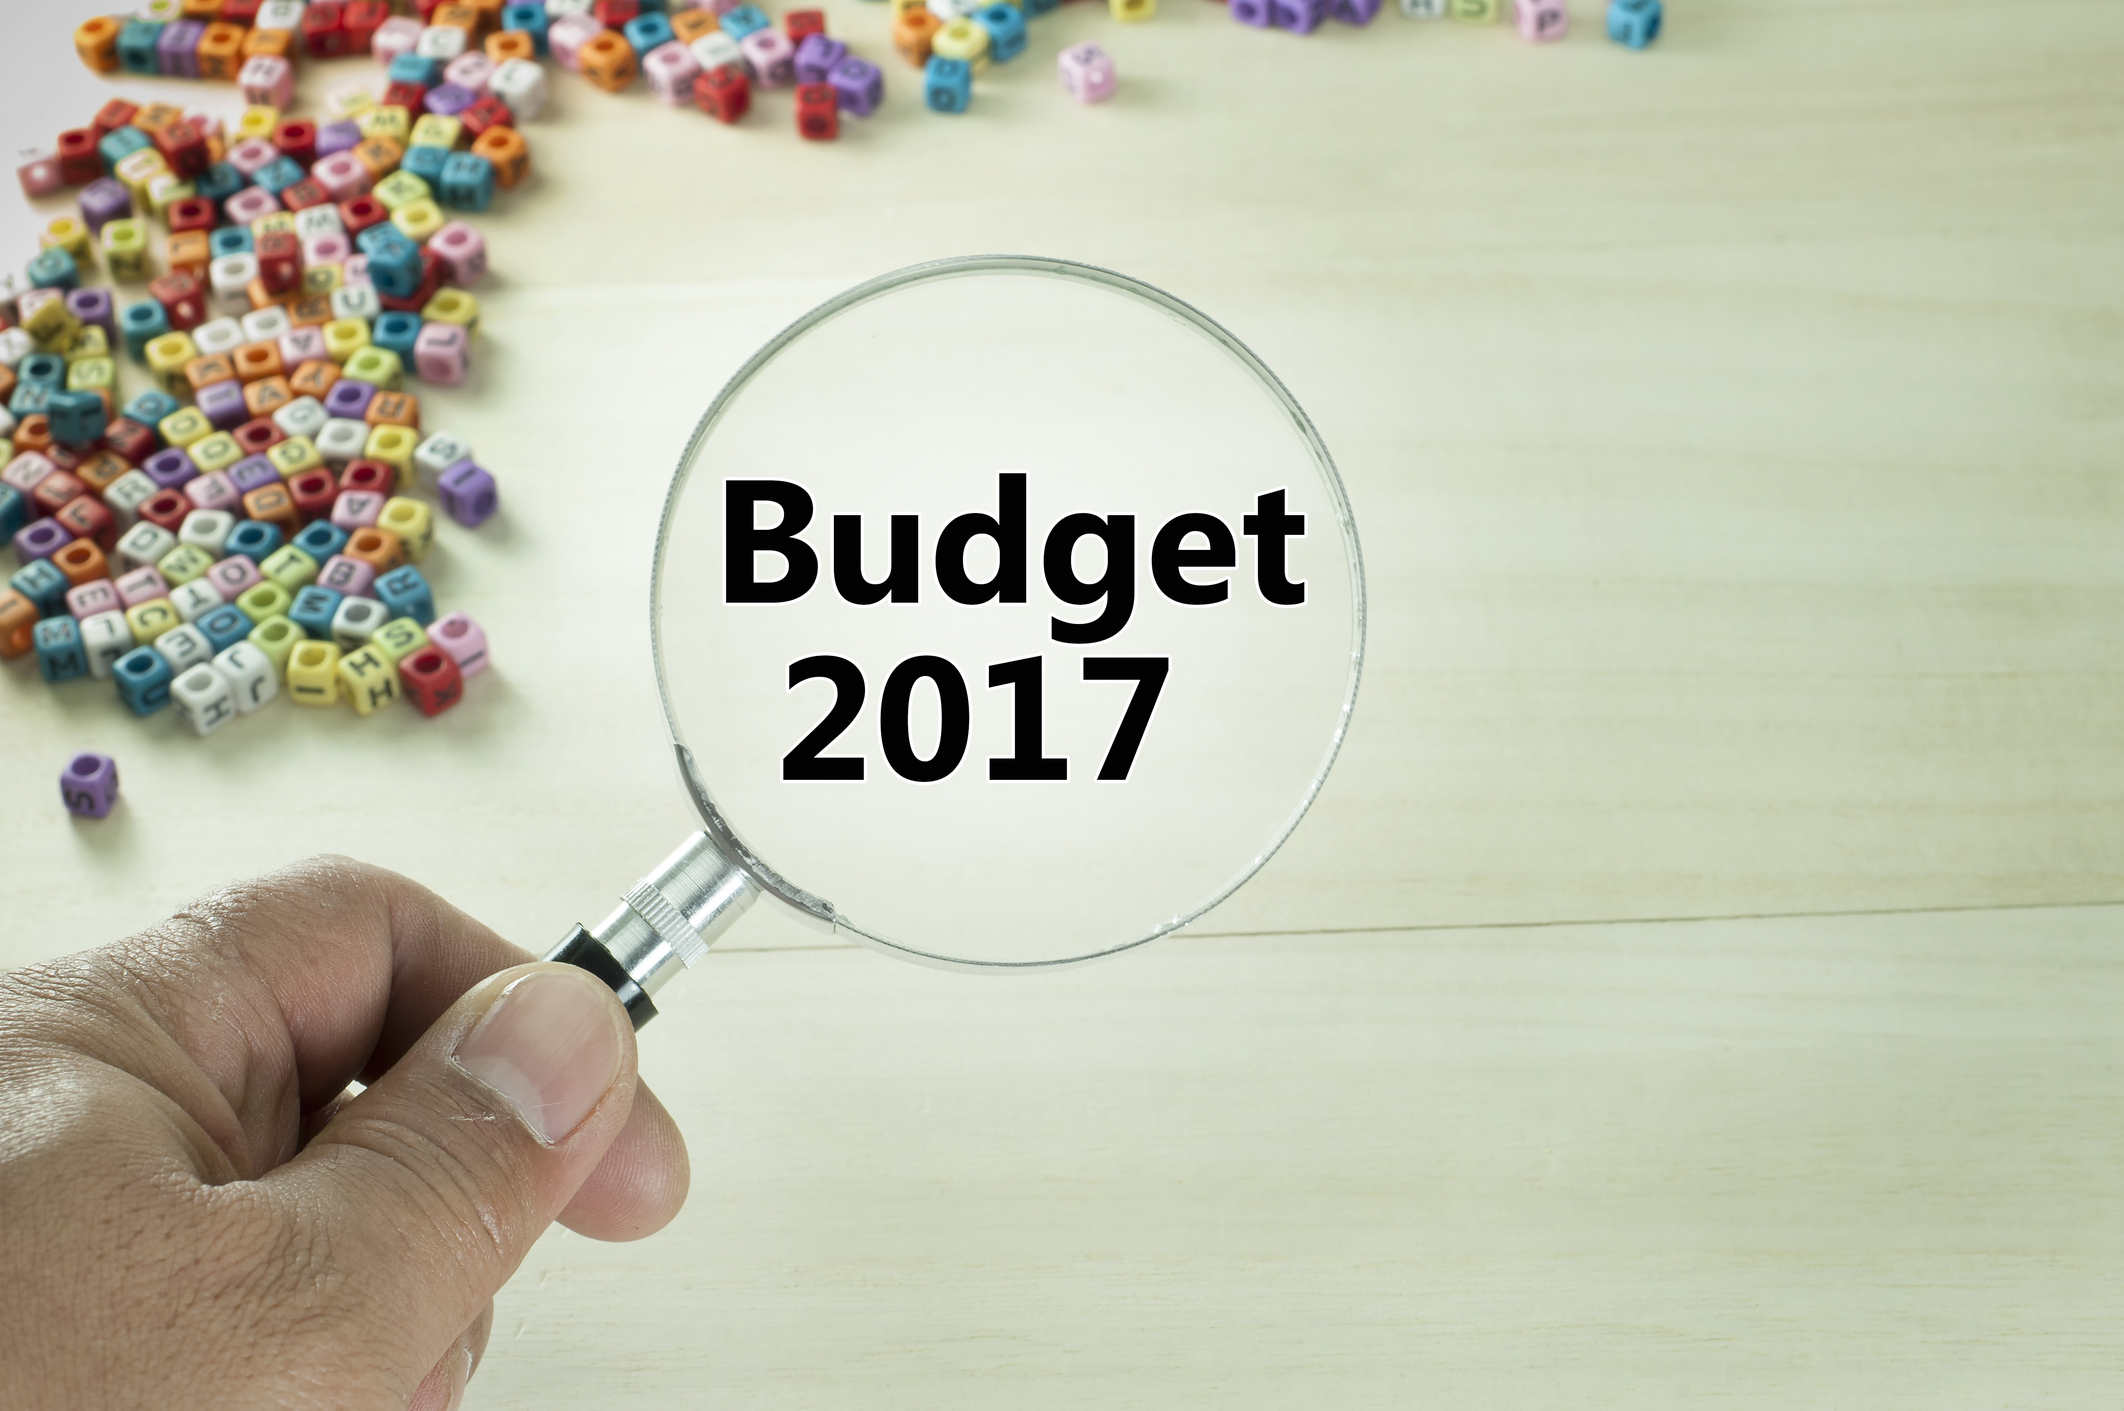 Budget season 2017